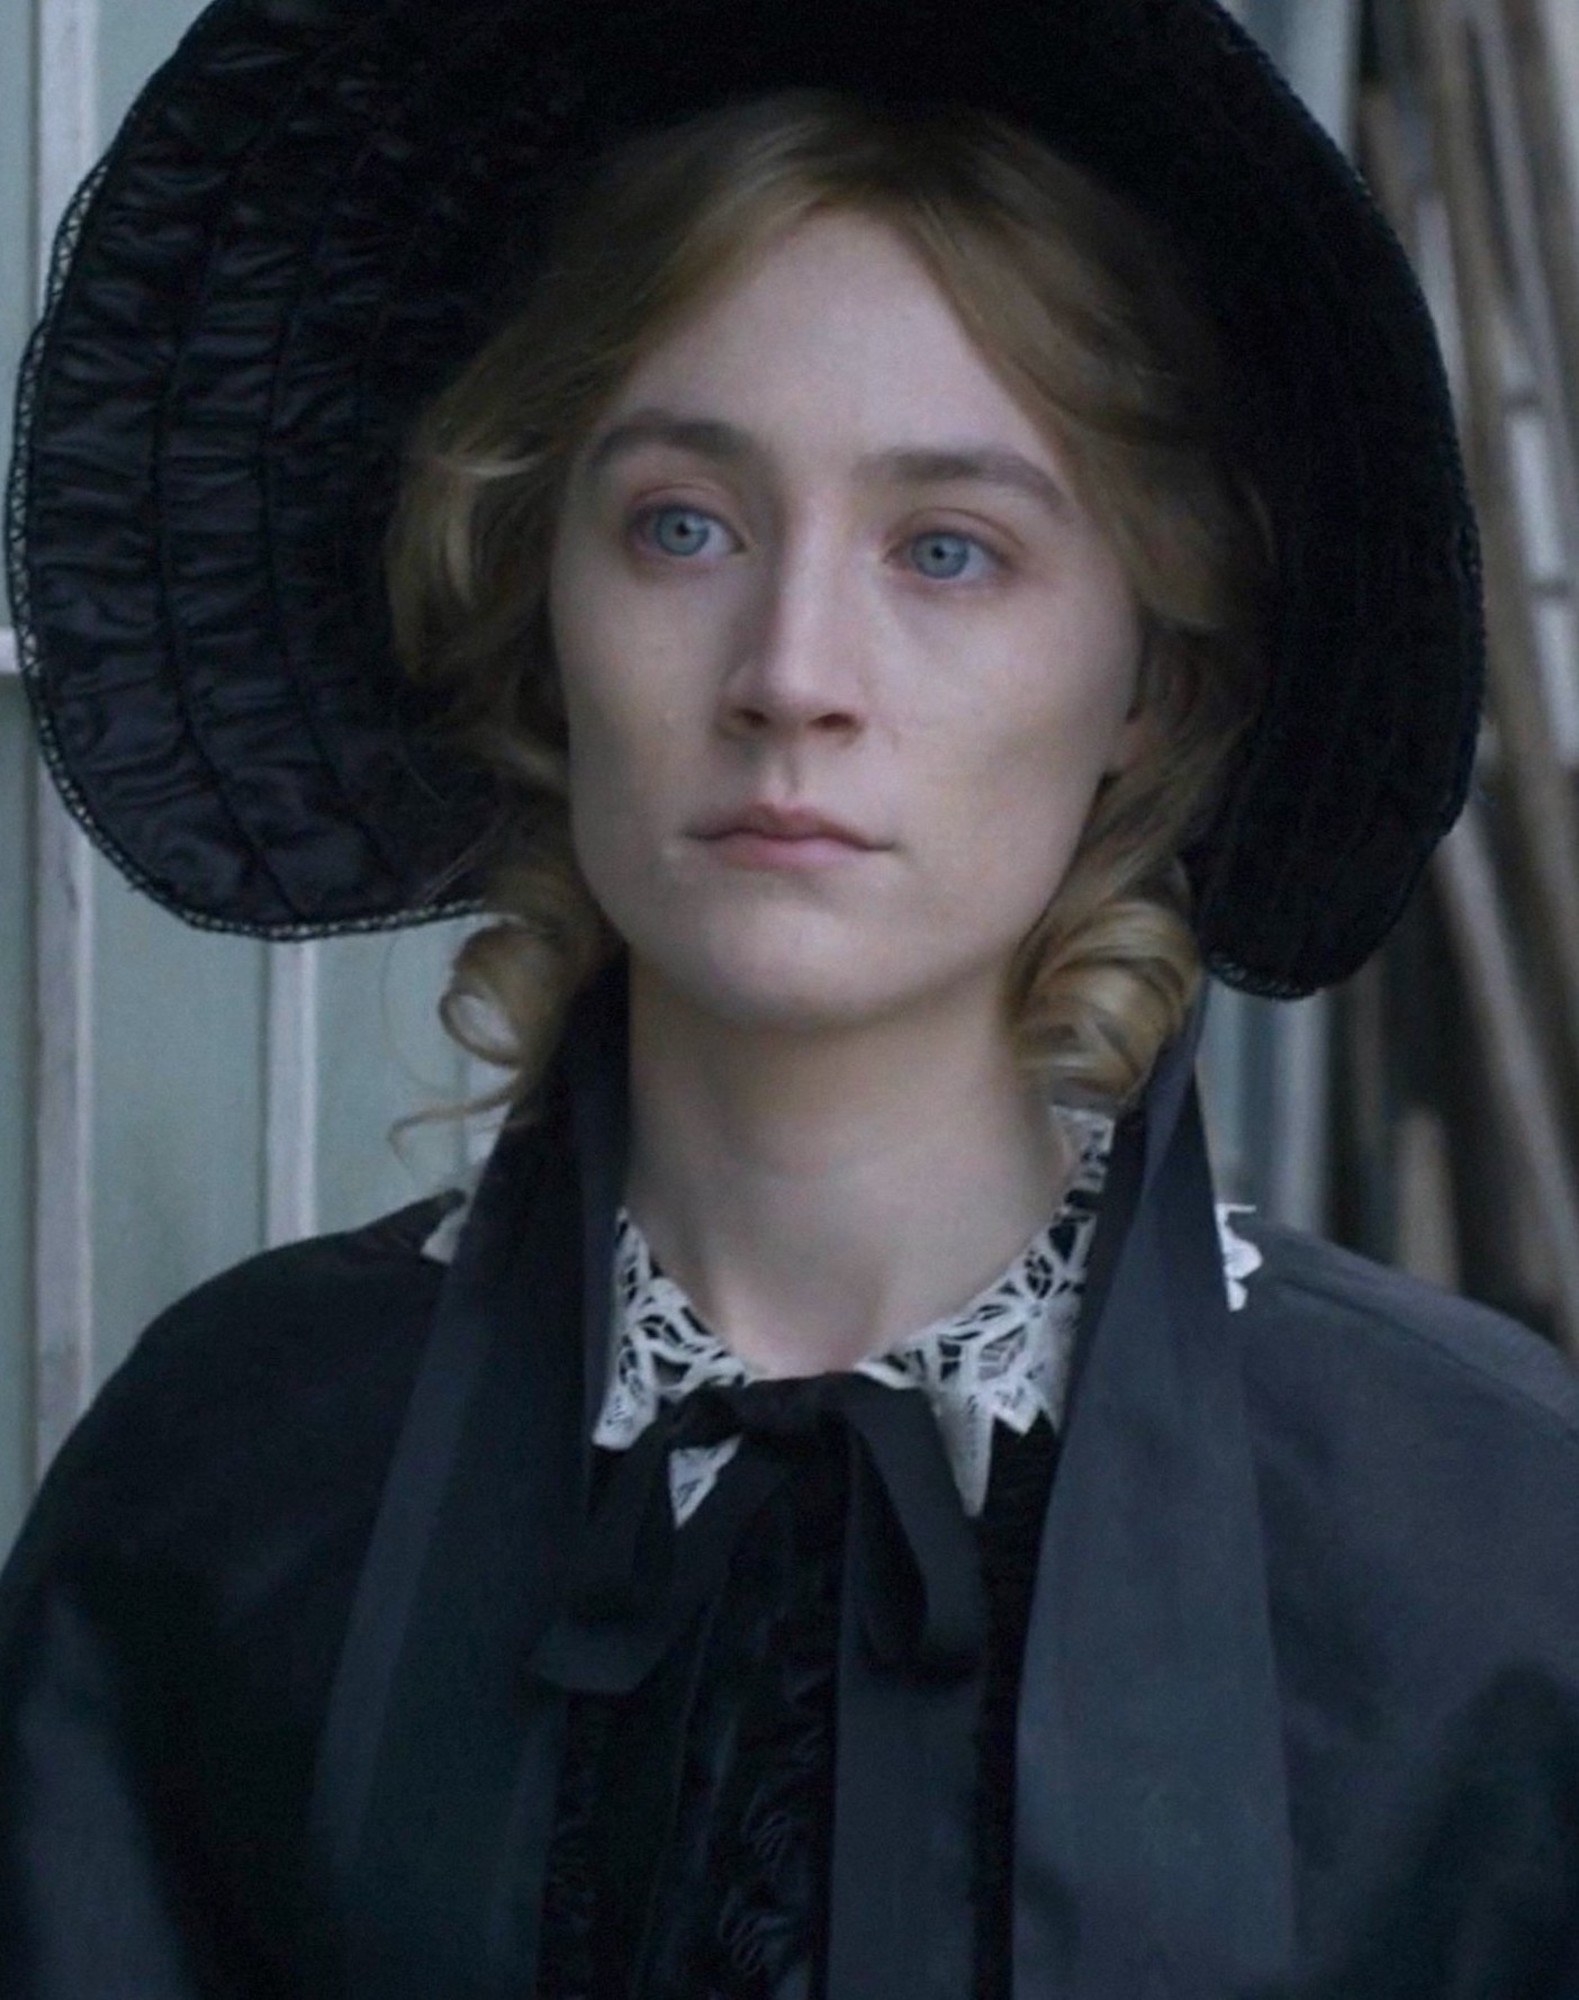 Saoirse Ronan wearing a wide brimmed hat, looking gloomy